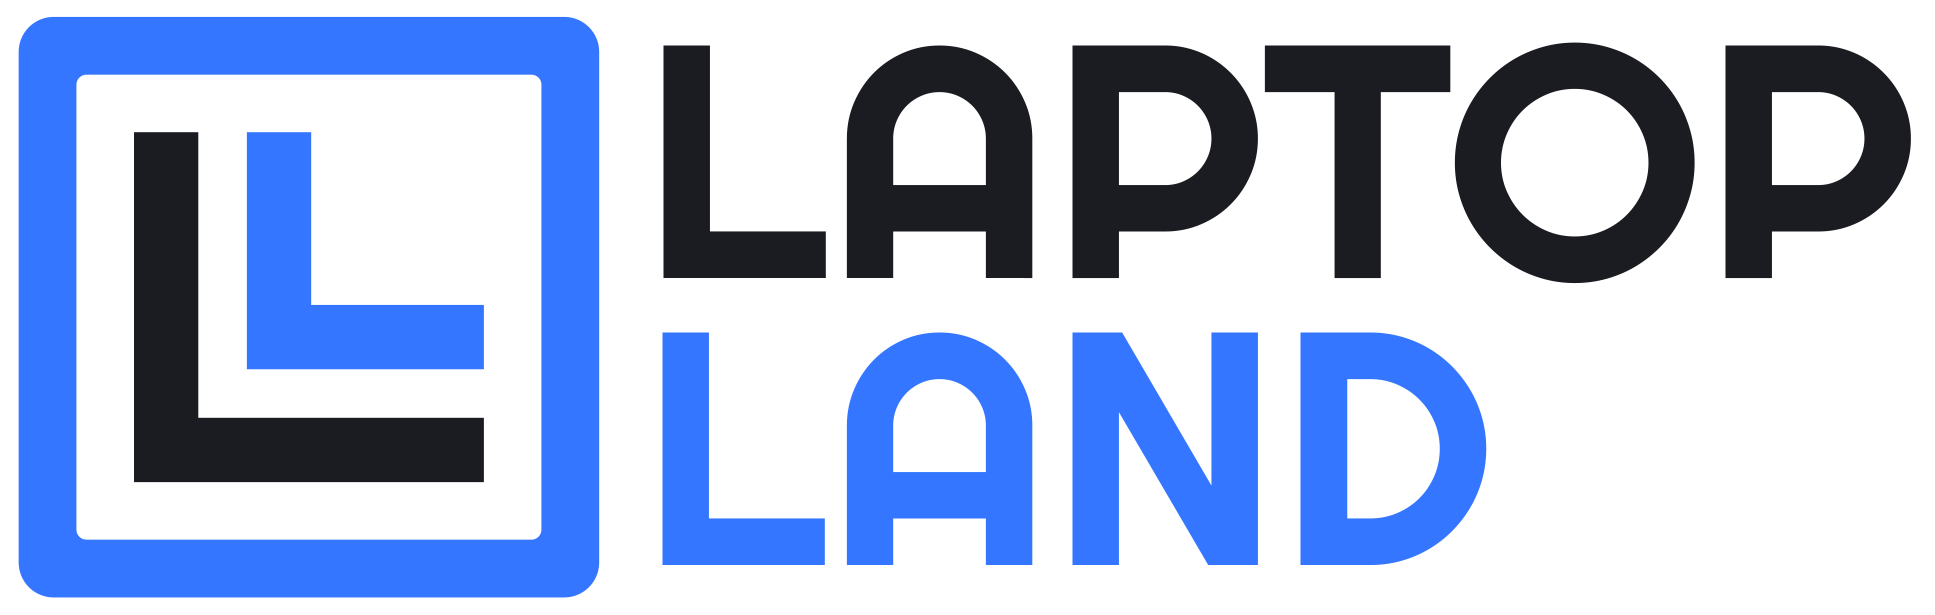 laptopland